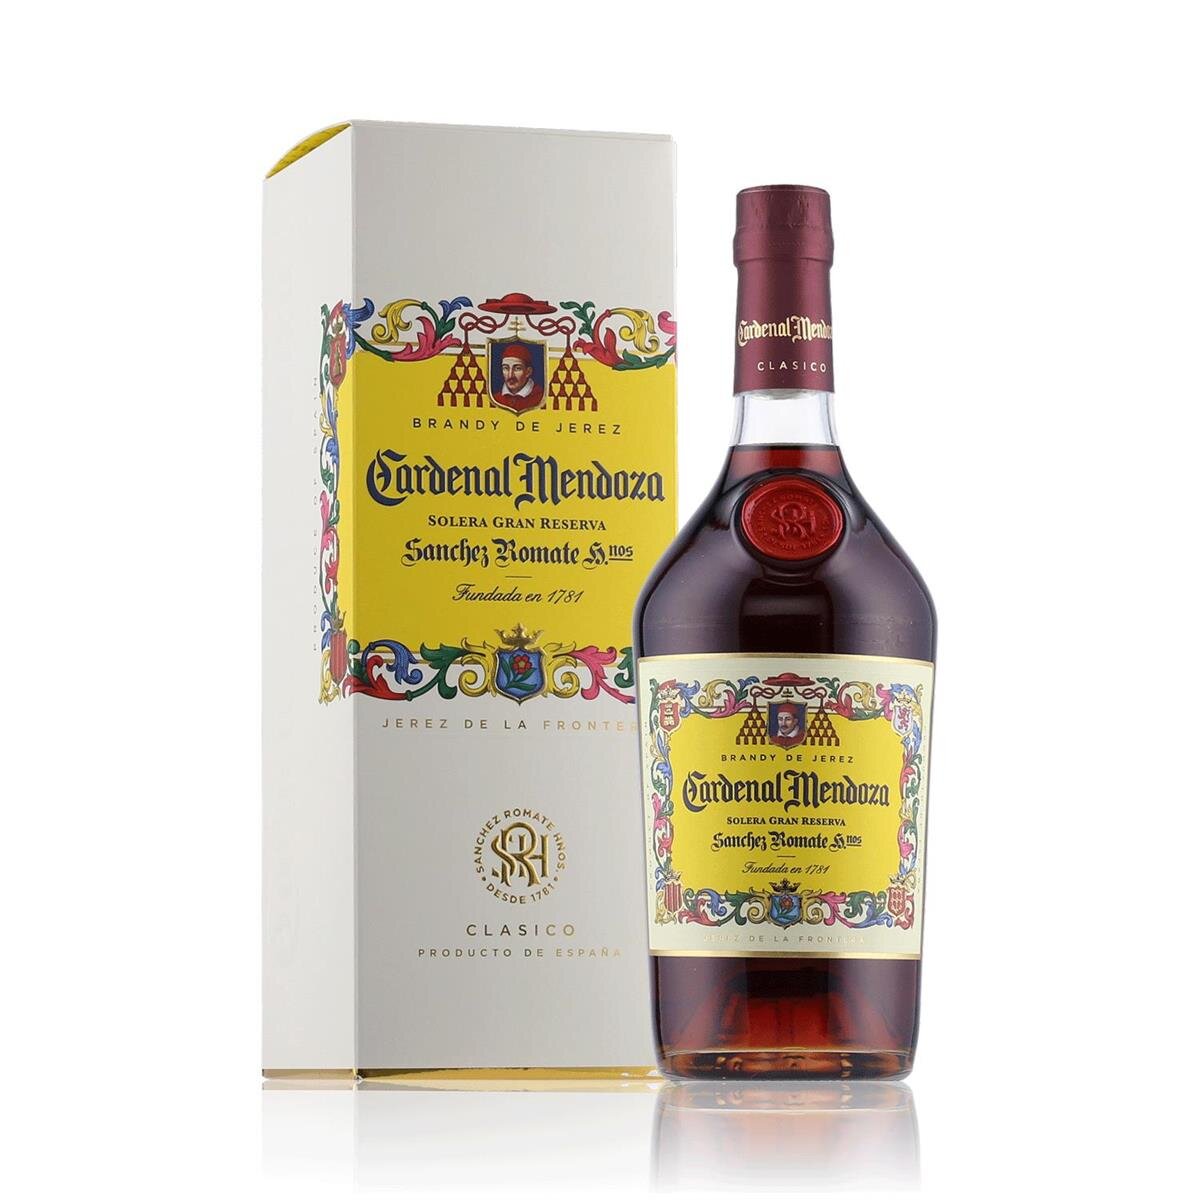 Cardenal Mendoza Solera Gran Reserva Brandy 40% Vol. 0,7l in Geschenk